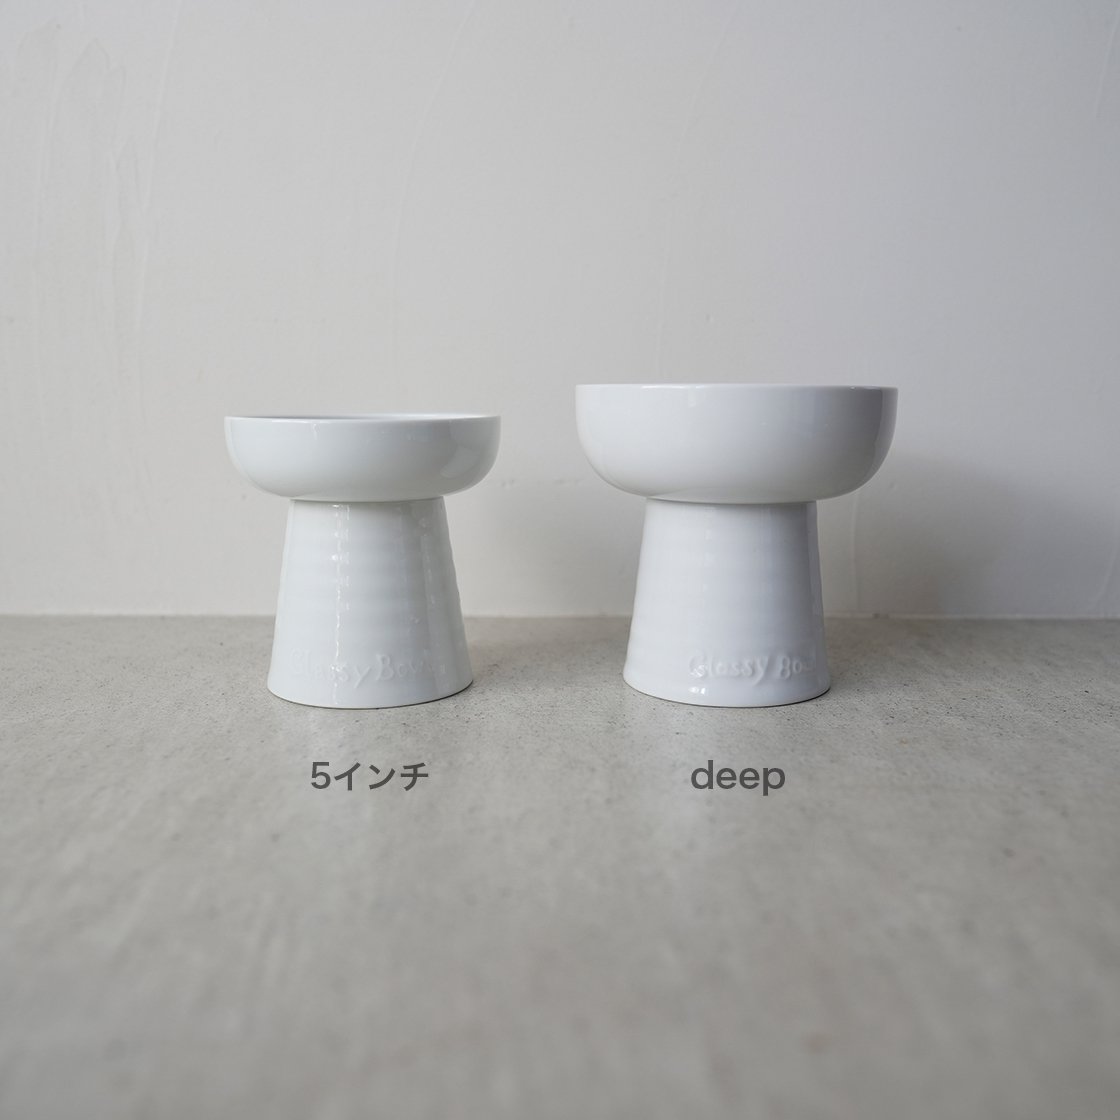 Classy Bowl【deep】Made in Japan